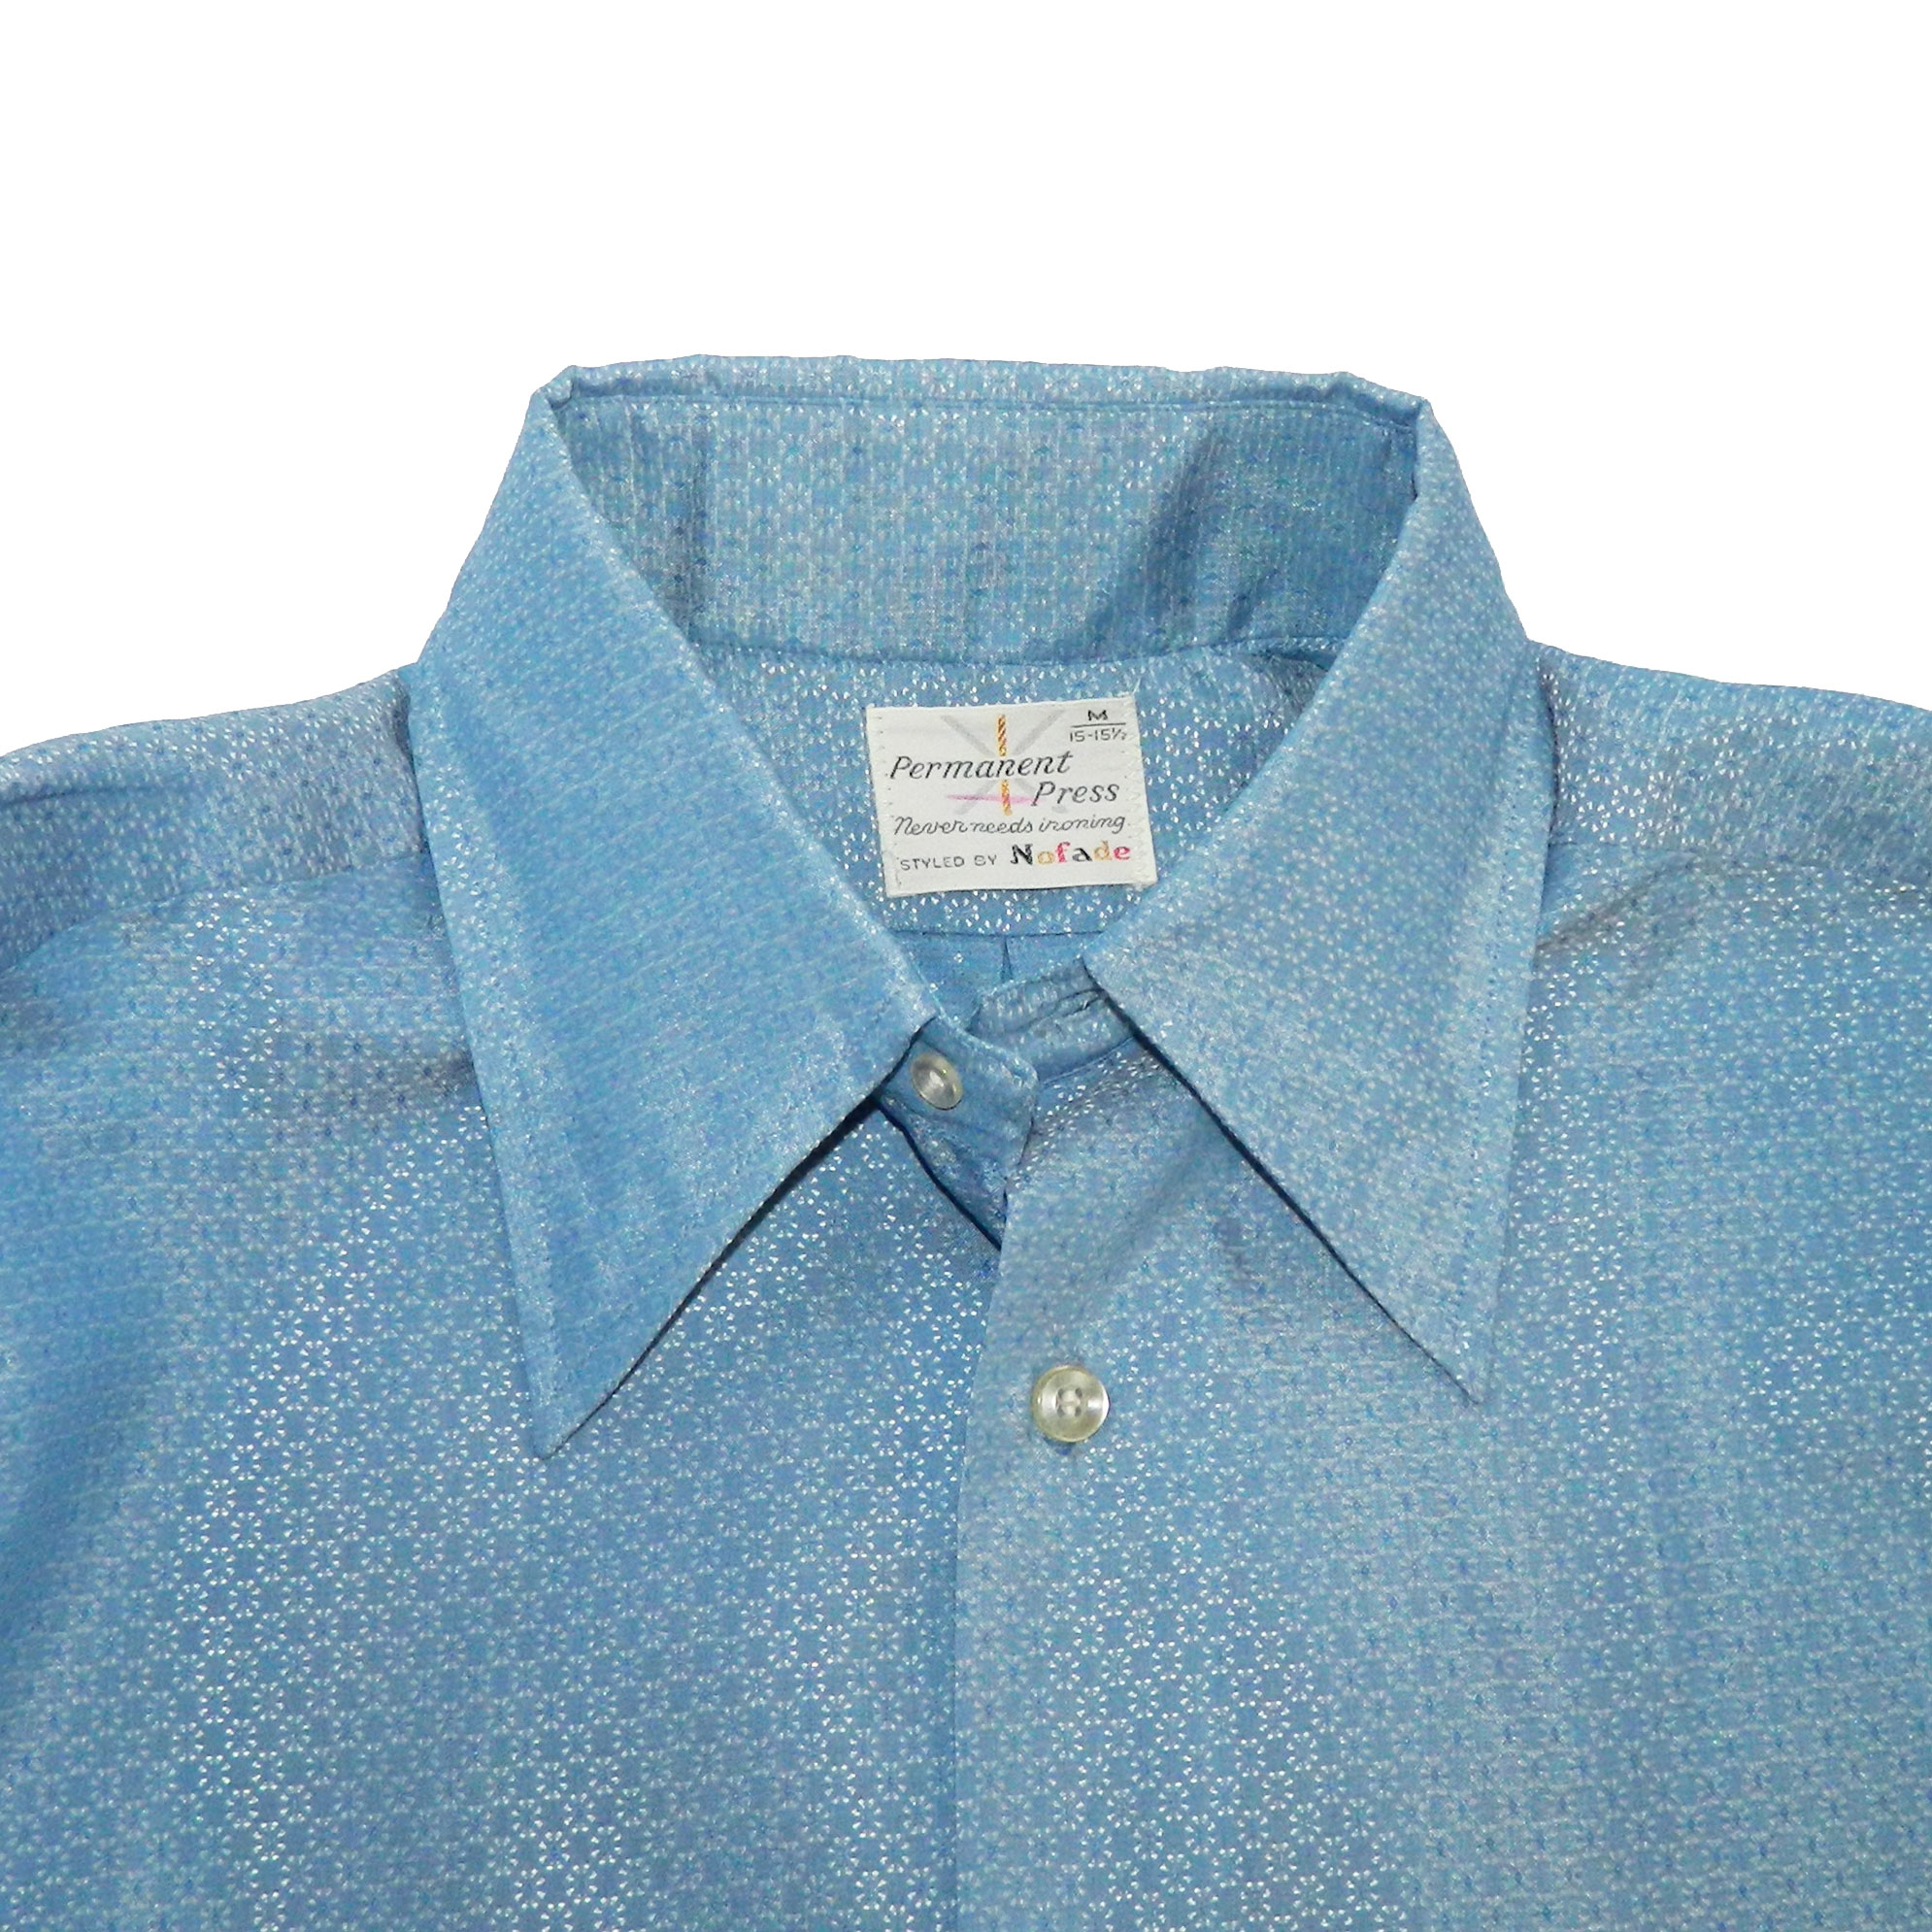 1960s short sleeve shirt